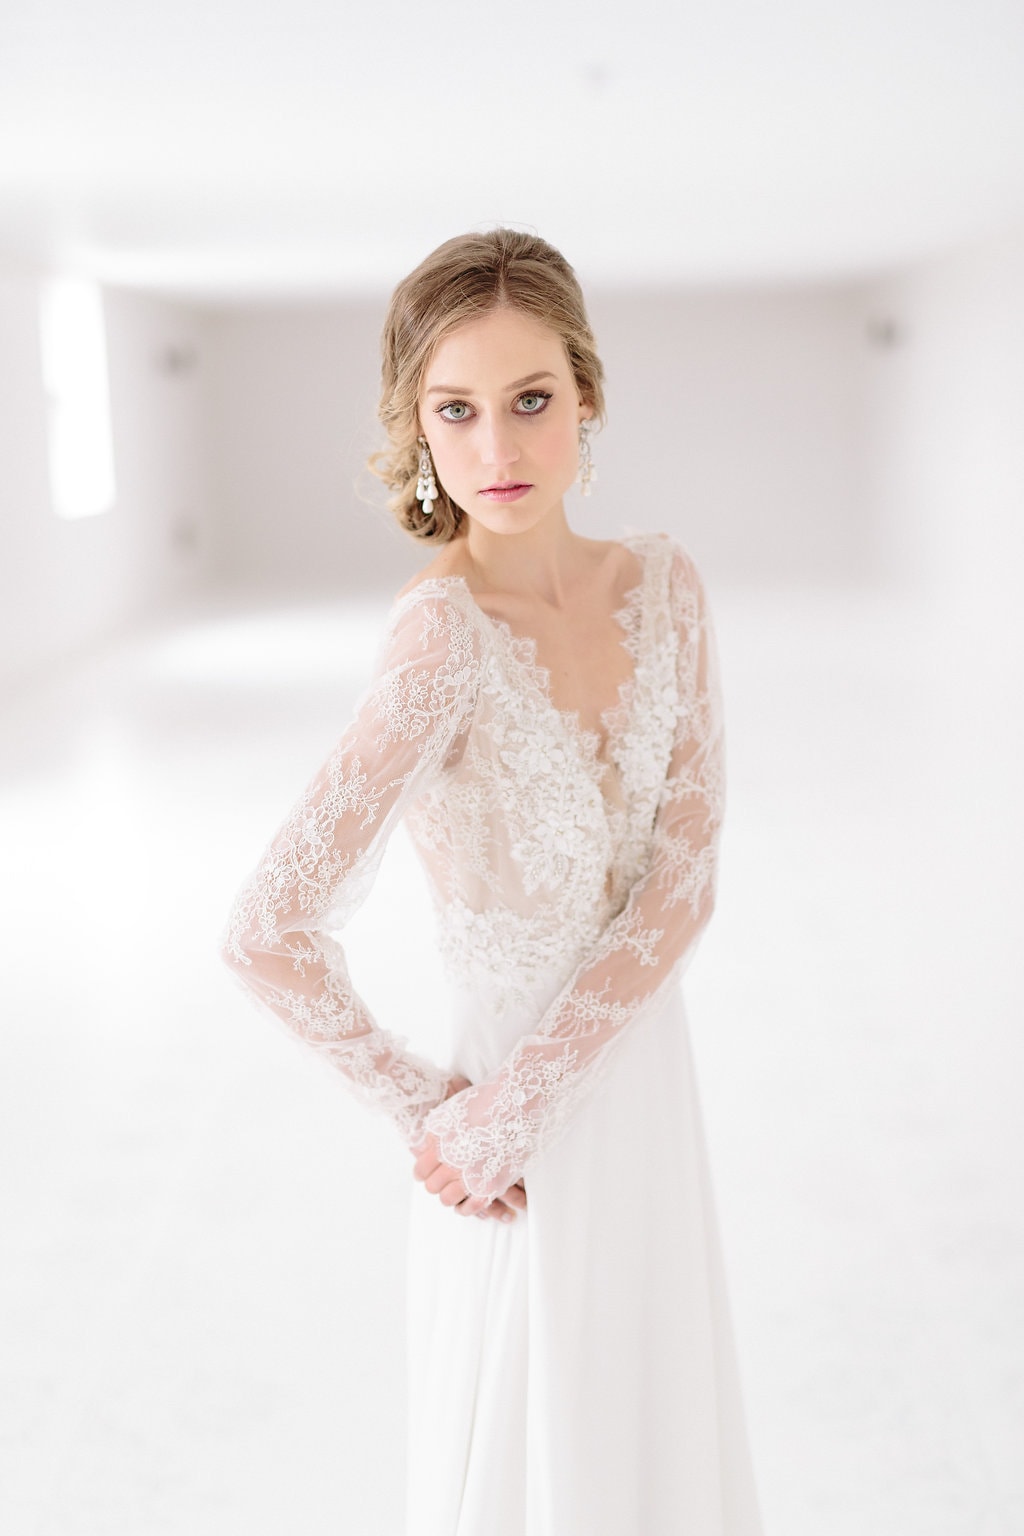 Mulberry & Mauve Bridal Inspiration | SouthBound Bride